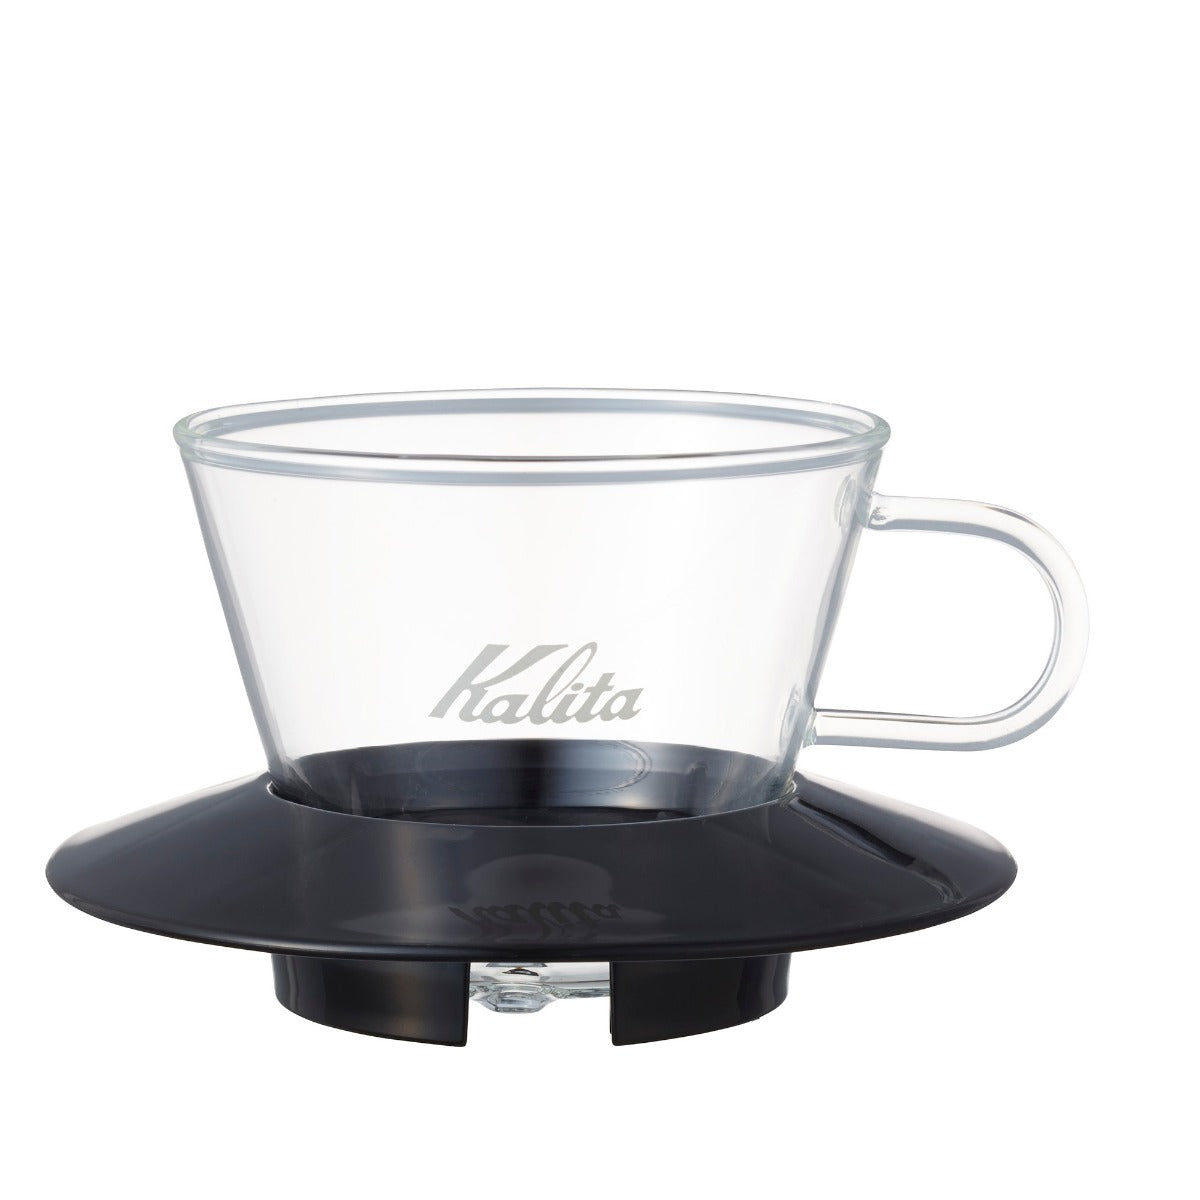 Kalita USA | Premium coffee brewing equipment